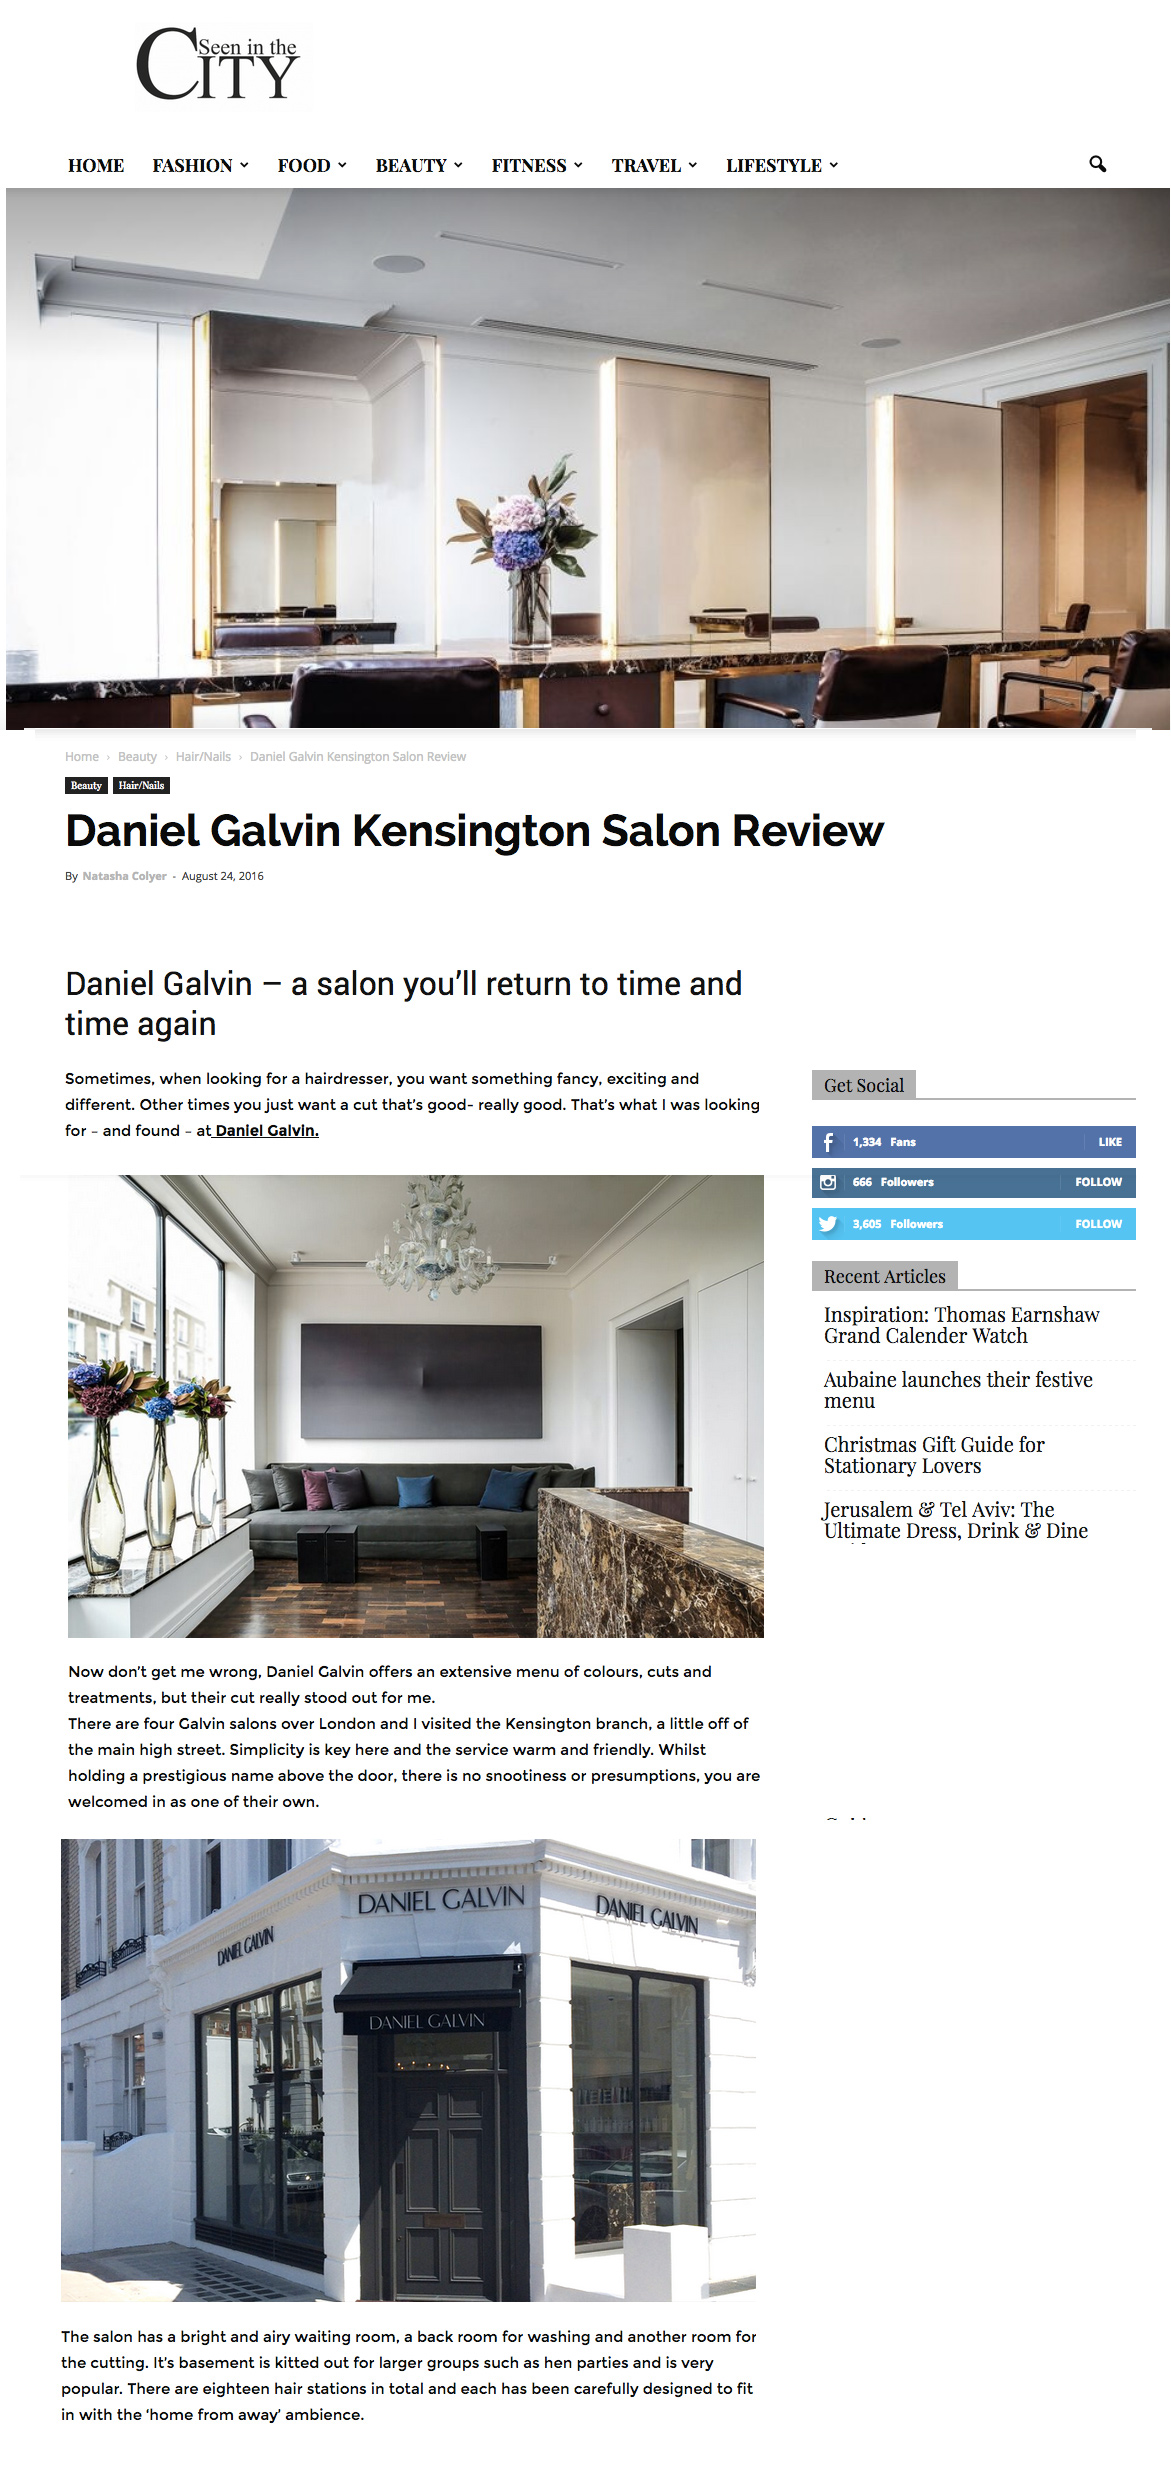 seen-in-the-city-daniel-galvin-kensington-review-article